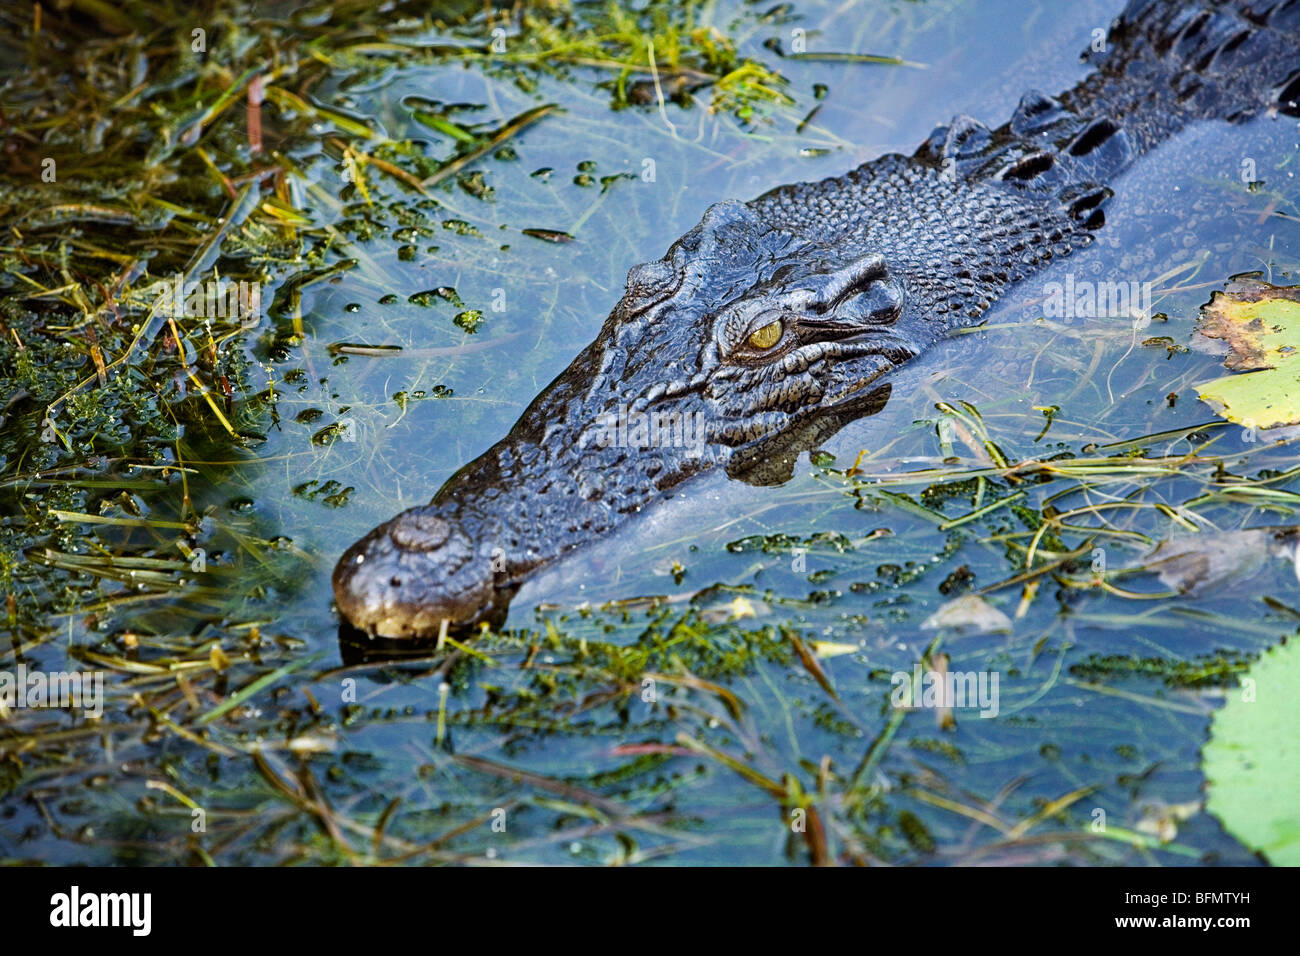 Australia, Northern Territory, Kakadu National Park, Cooinda. Saltwater/ estuarine crocodile in the Yellow Water Wetlands. Stock Photo